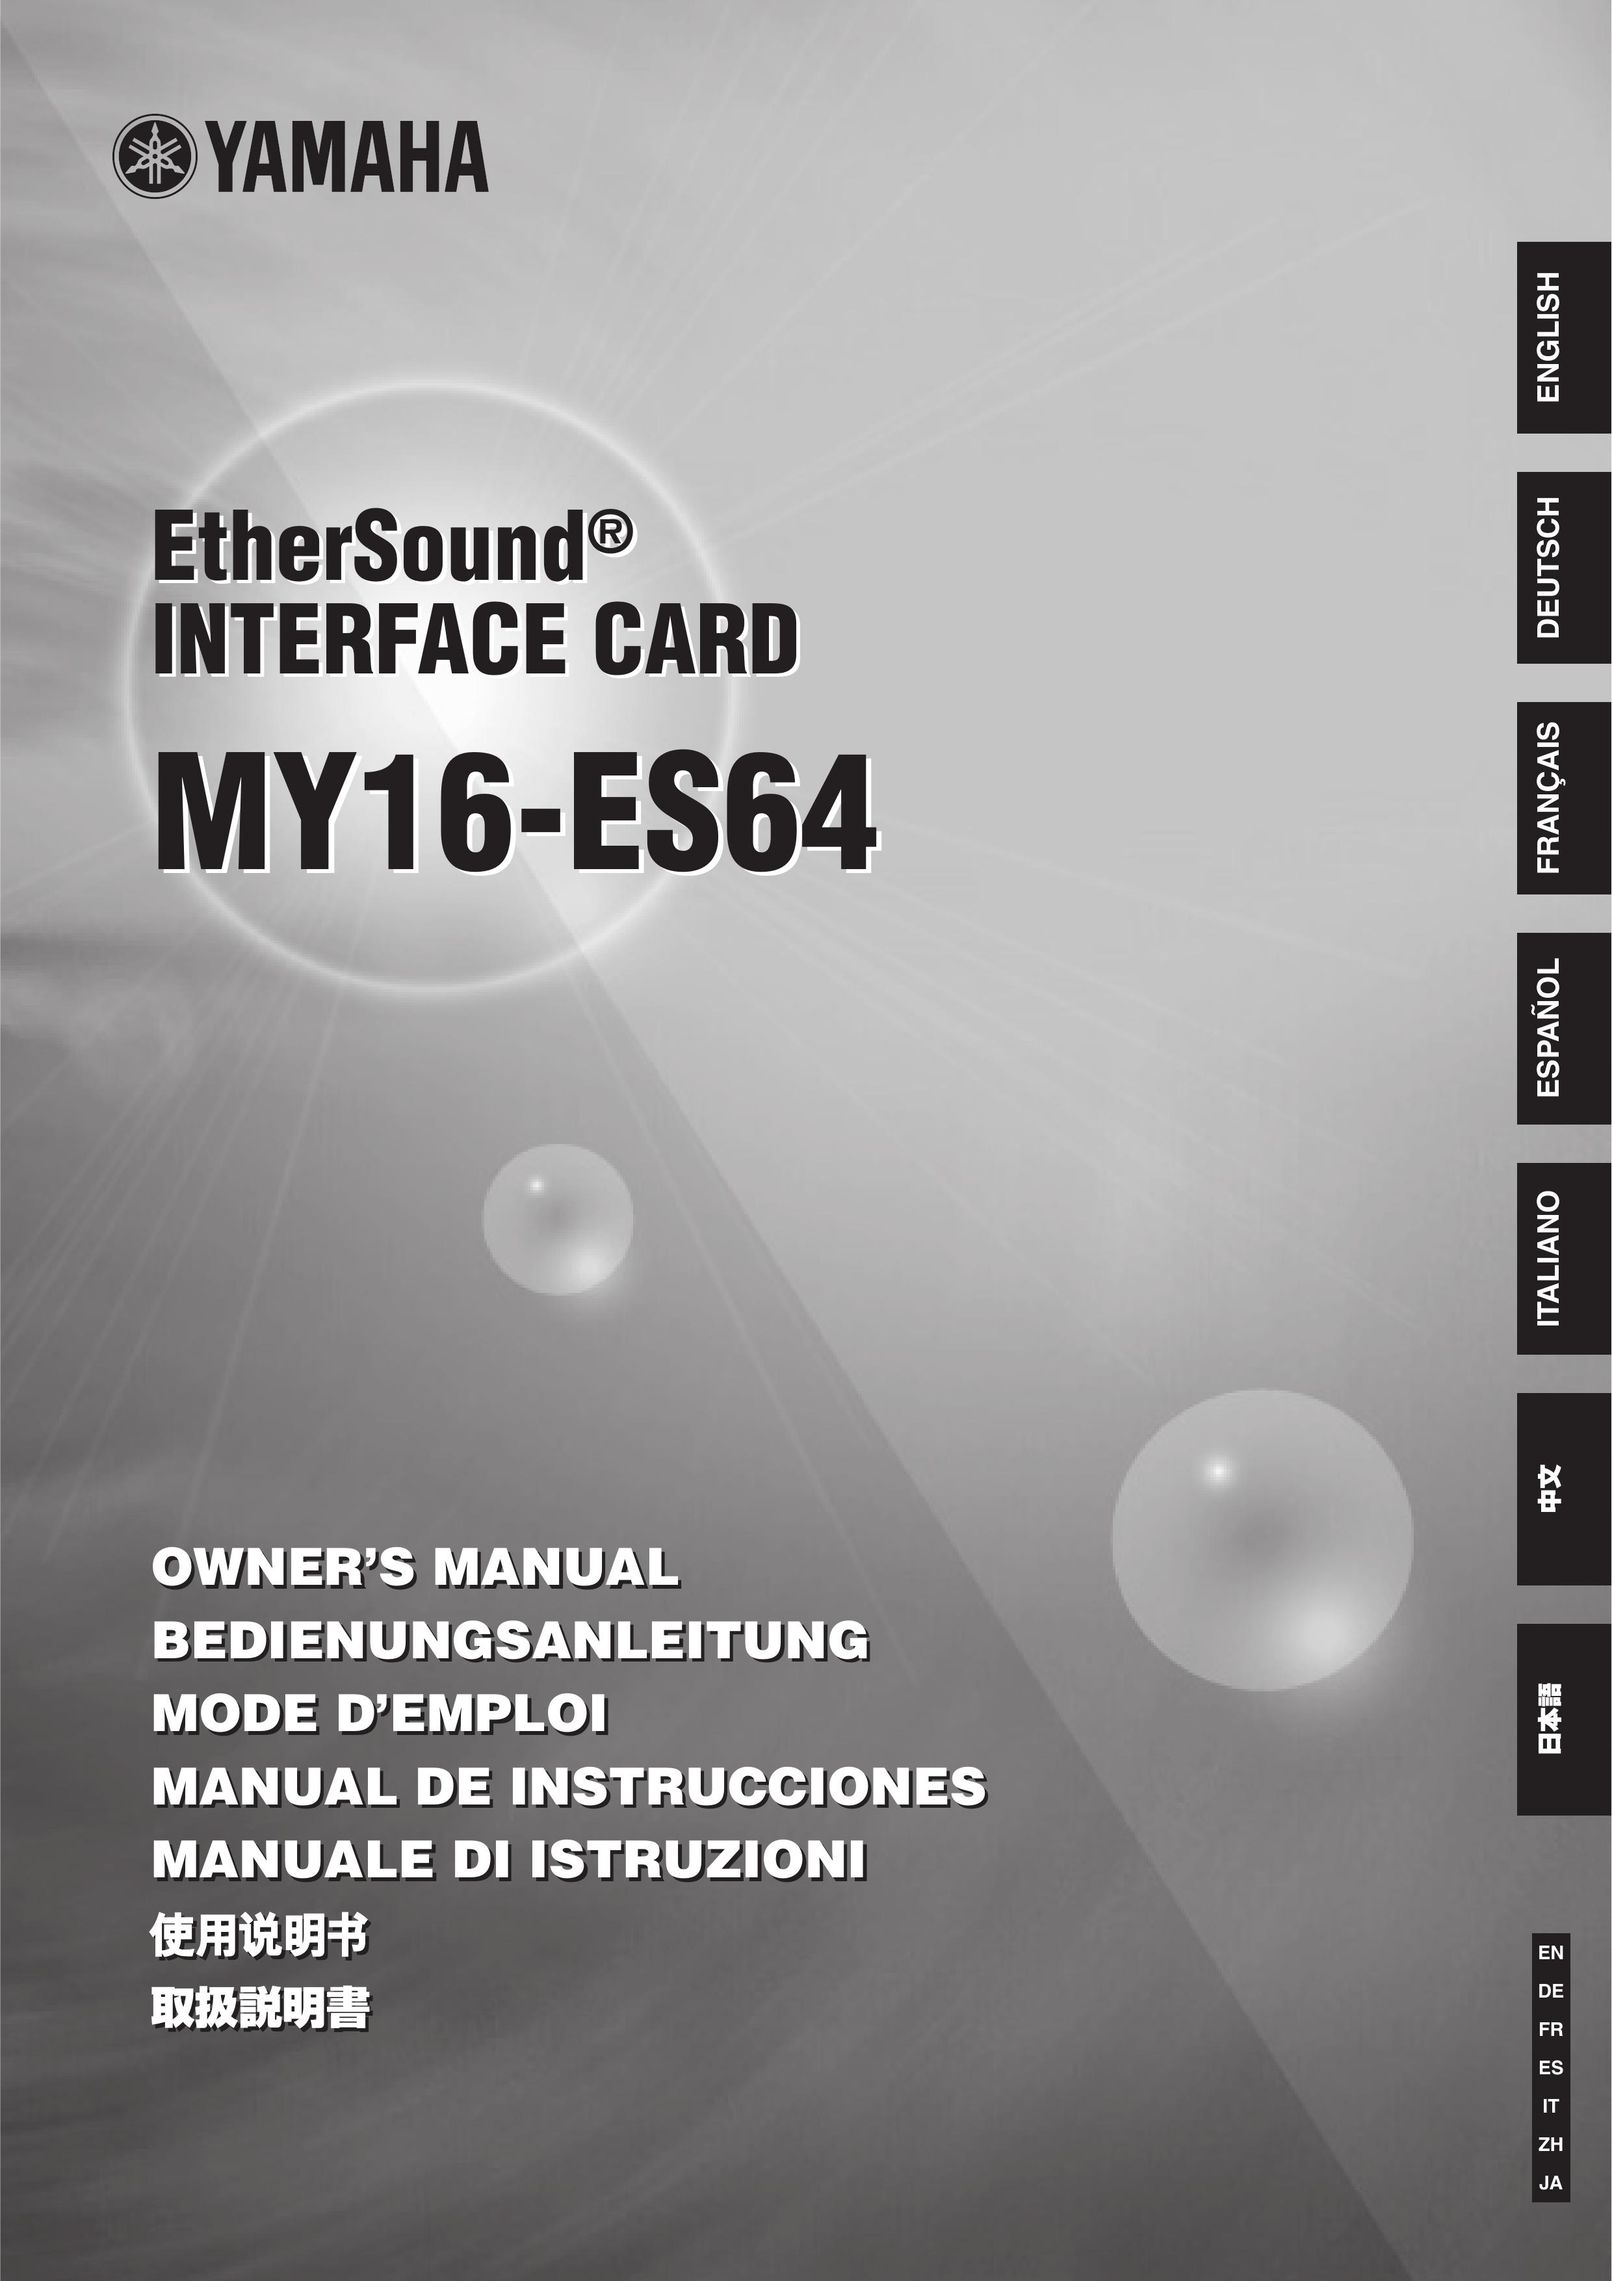 Yamaha MY16-ES64 Network Card User Manual